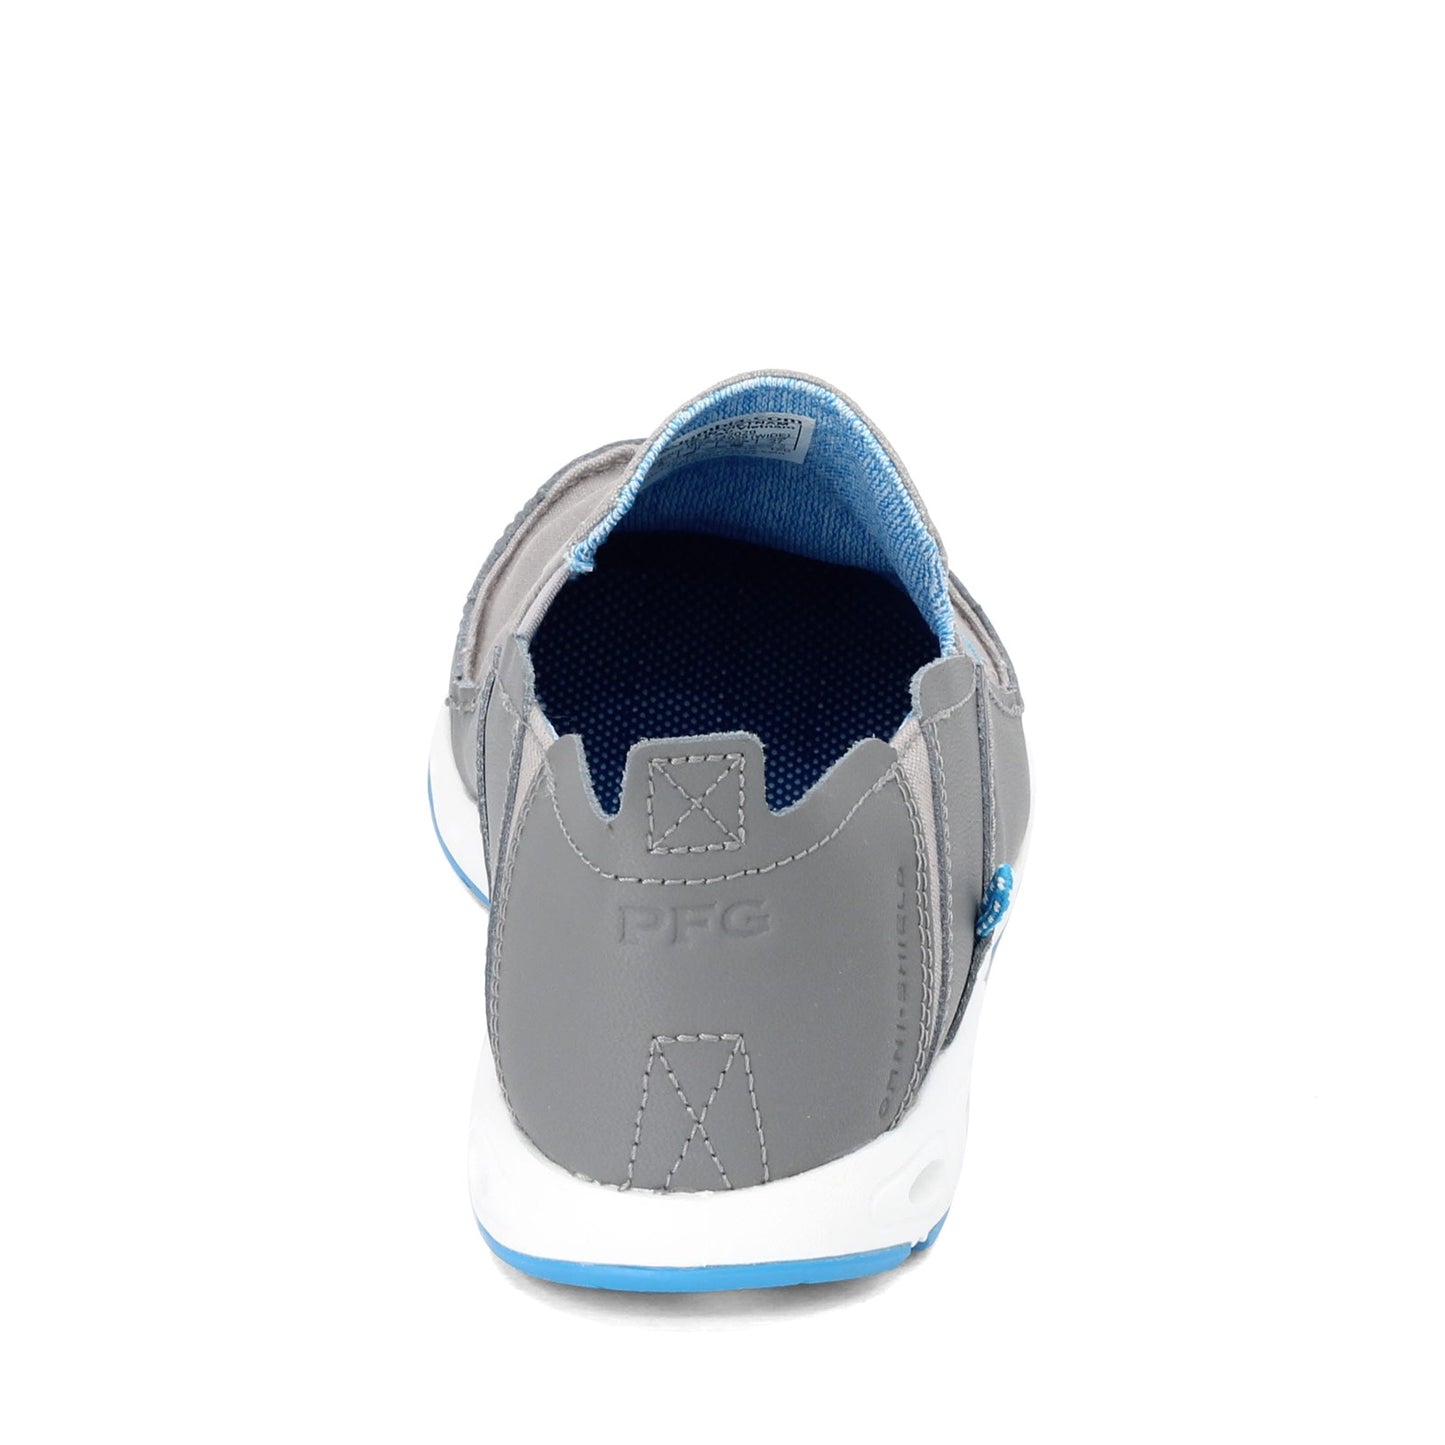 Peltz Shoes  Men's Columbia Bahama Vent PFG Slip-On GREY BLUE 1673141-029